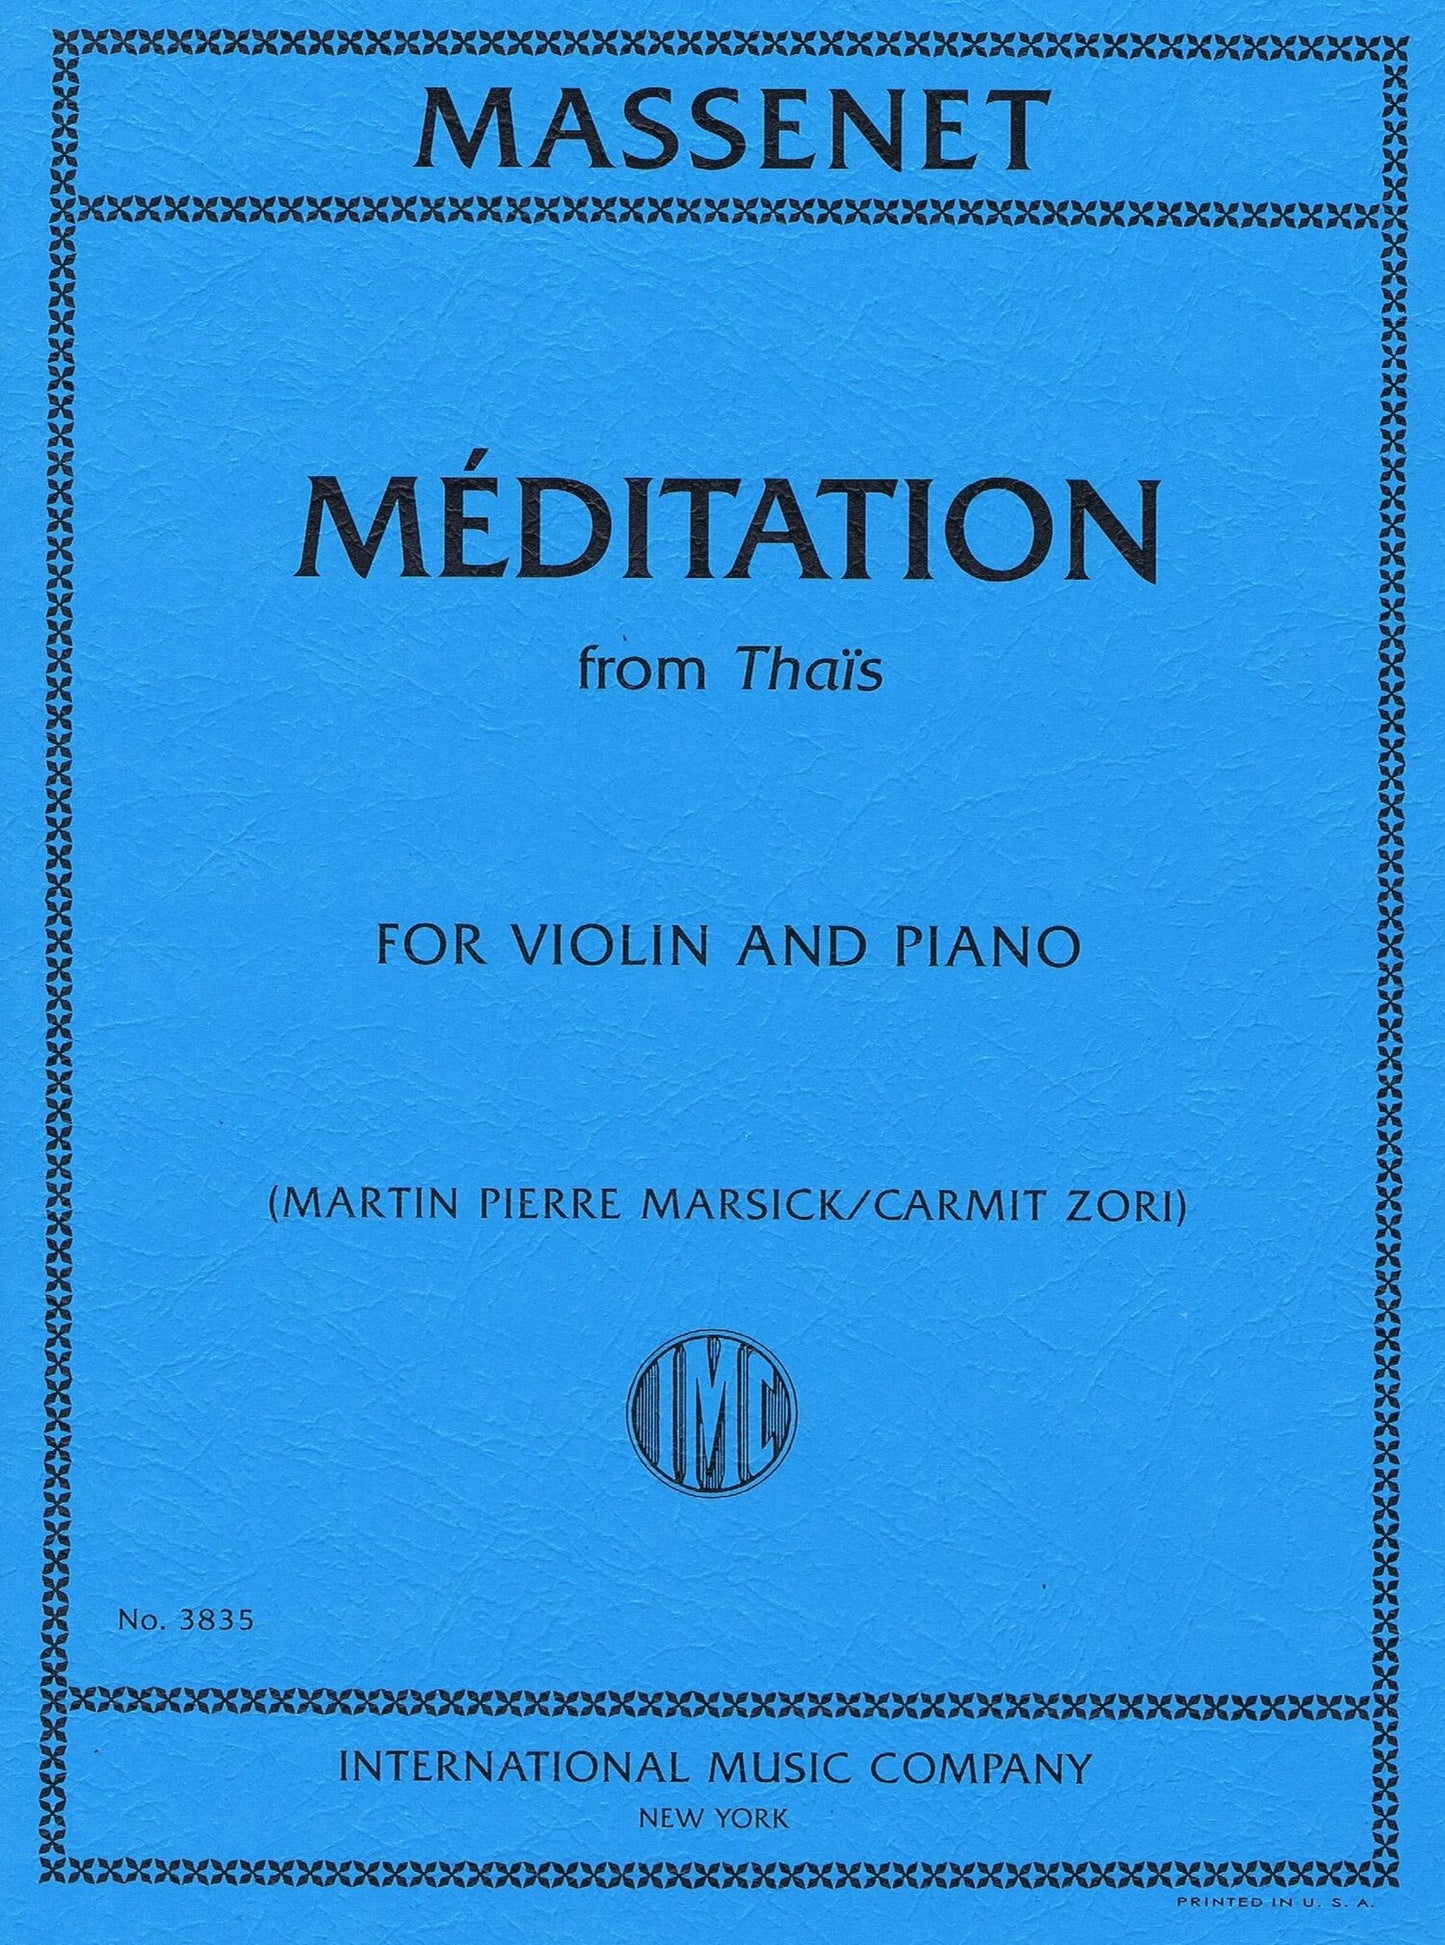 IMC Massenet Meditation from Thais No. 3835